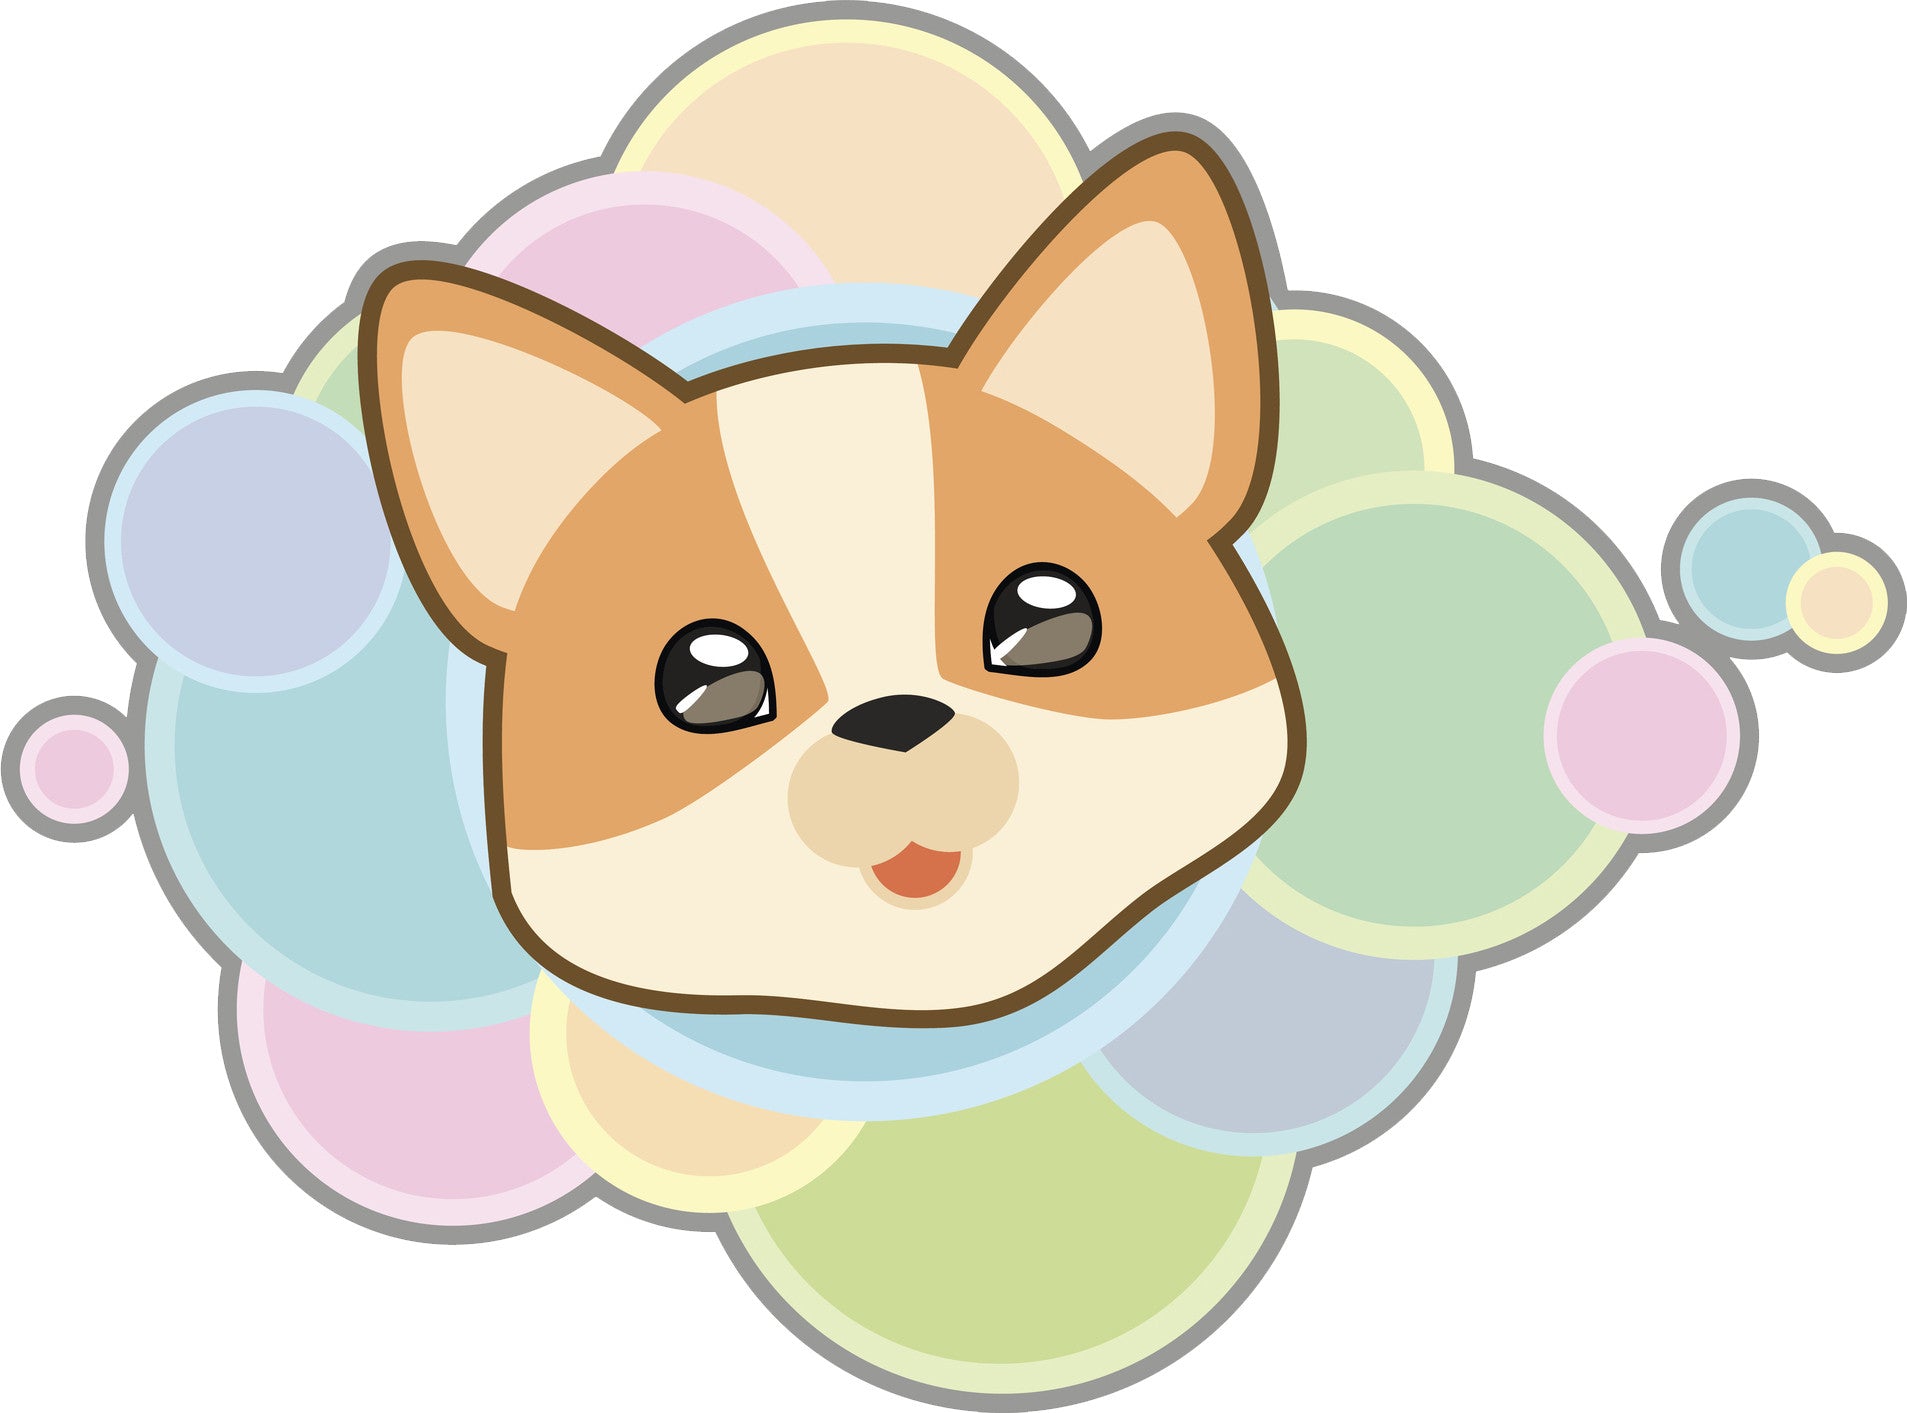 Cute Adorable Kawaii Puppy Dog Cartoon with Rainbow Bubbles - Shiba Inu Vinyl Decal Sticker